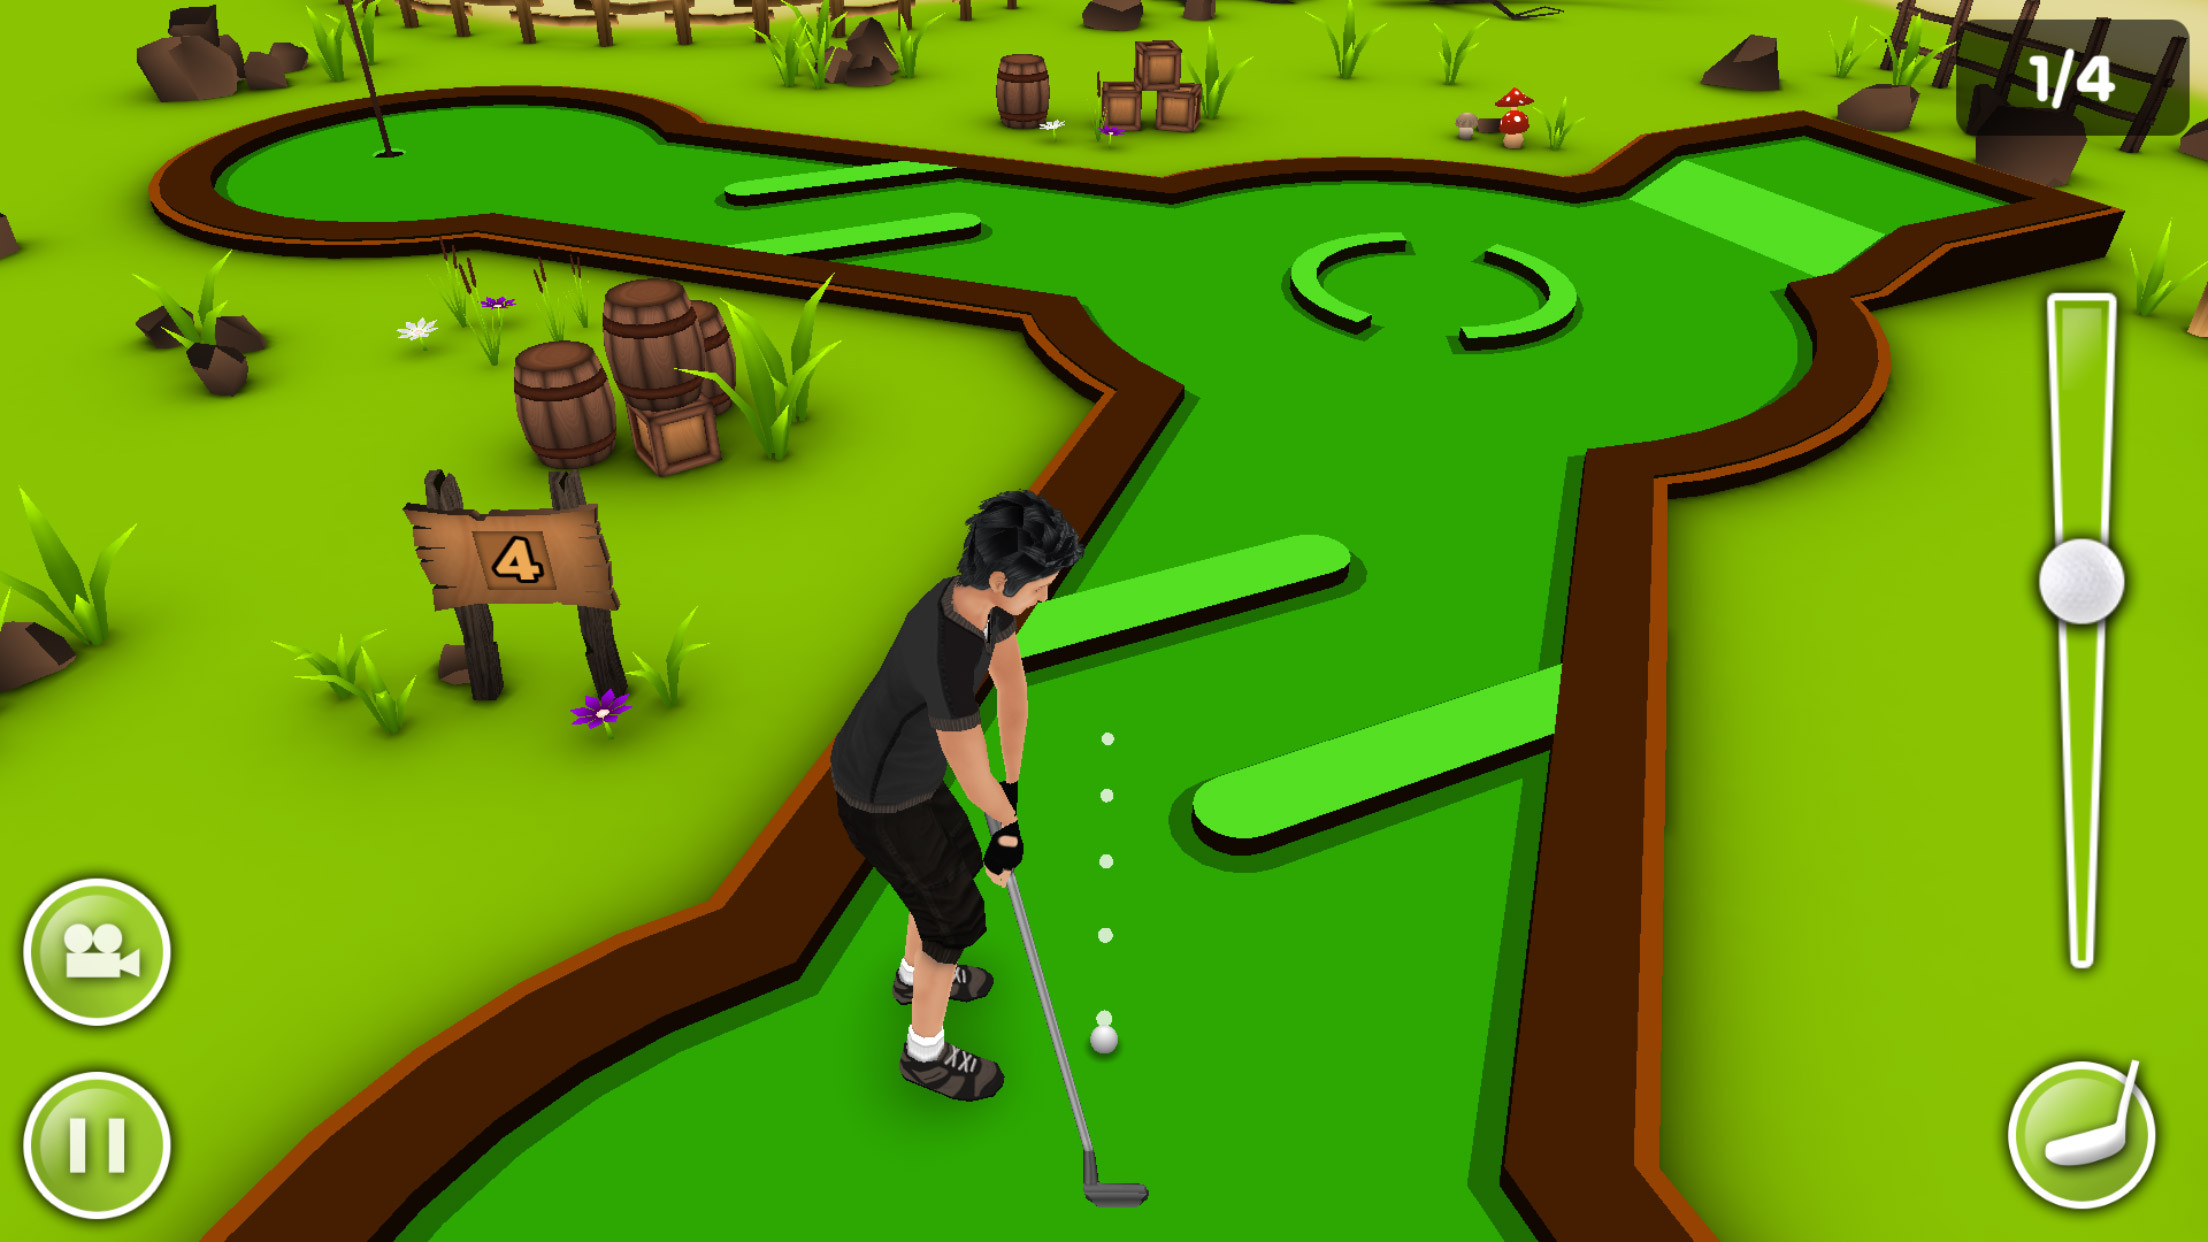 Free 3D Golf Online Game